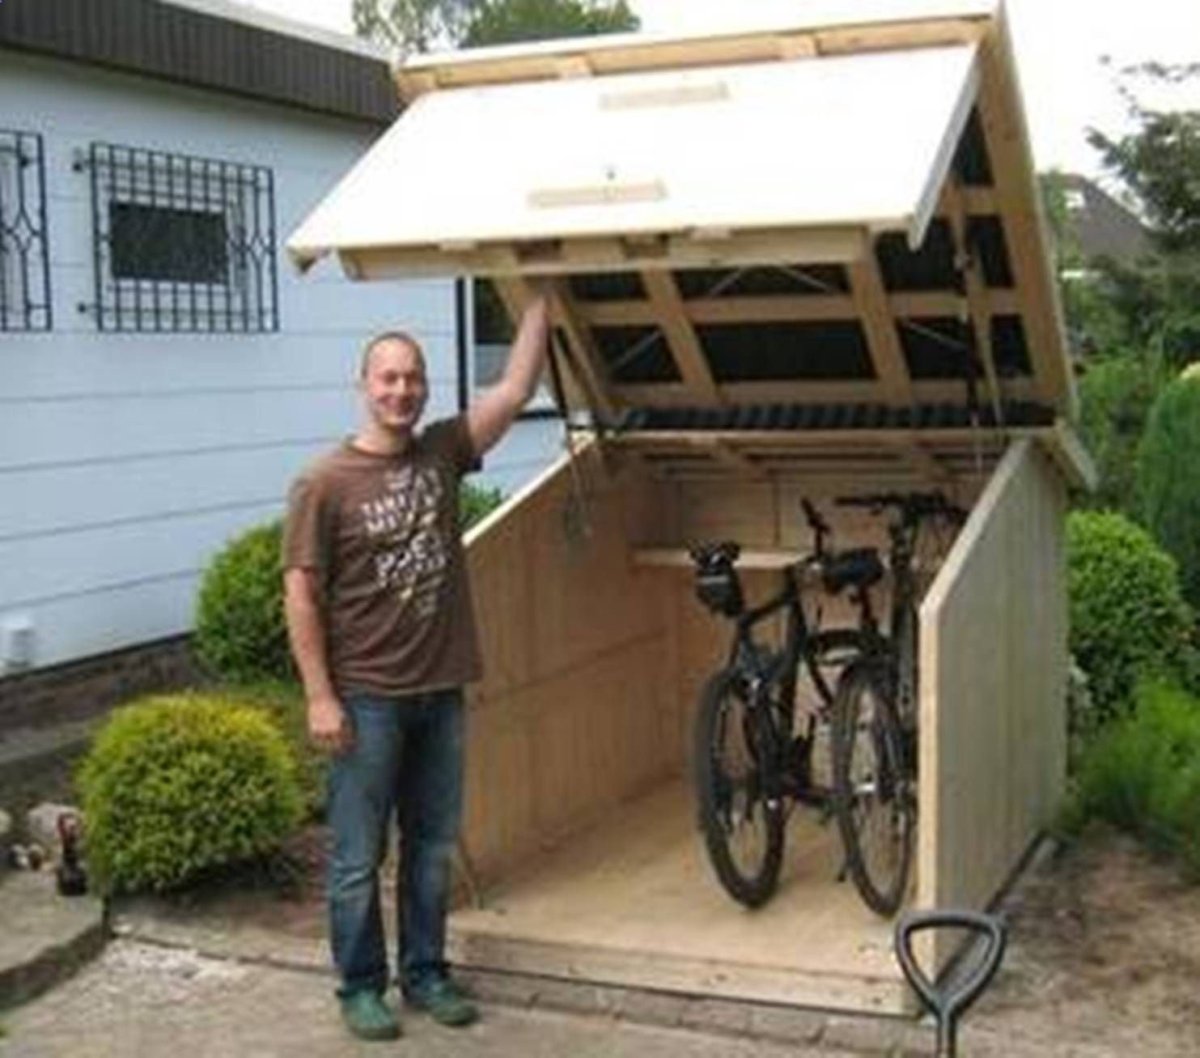 Навес для велосипедов на даче